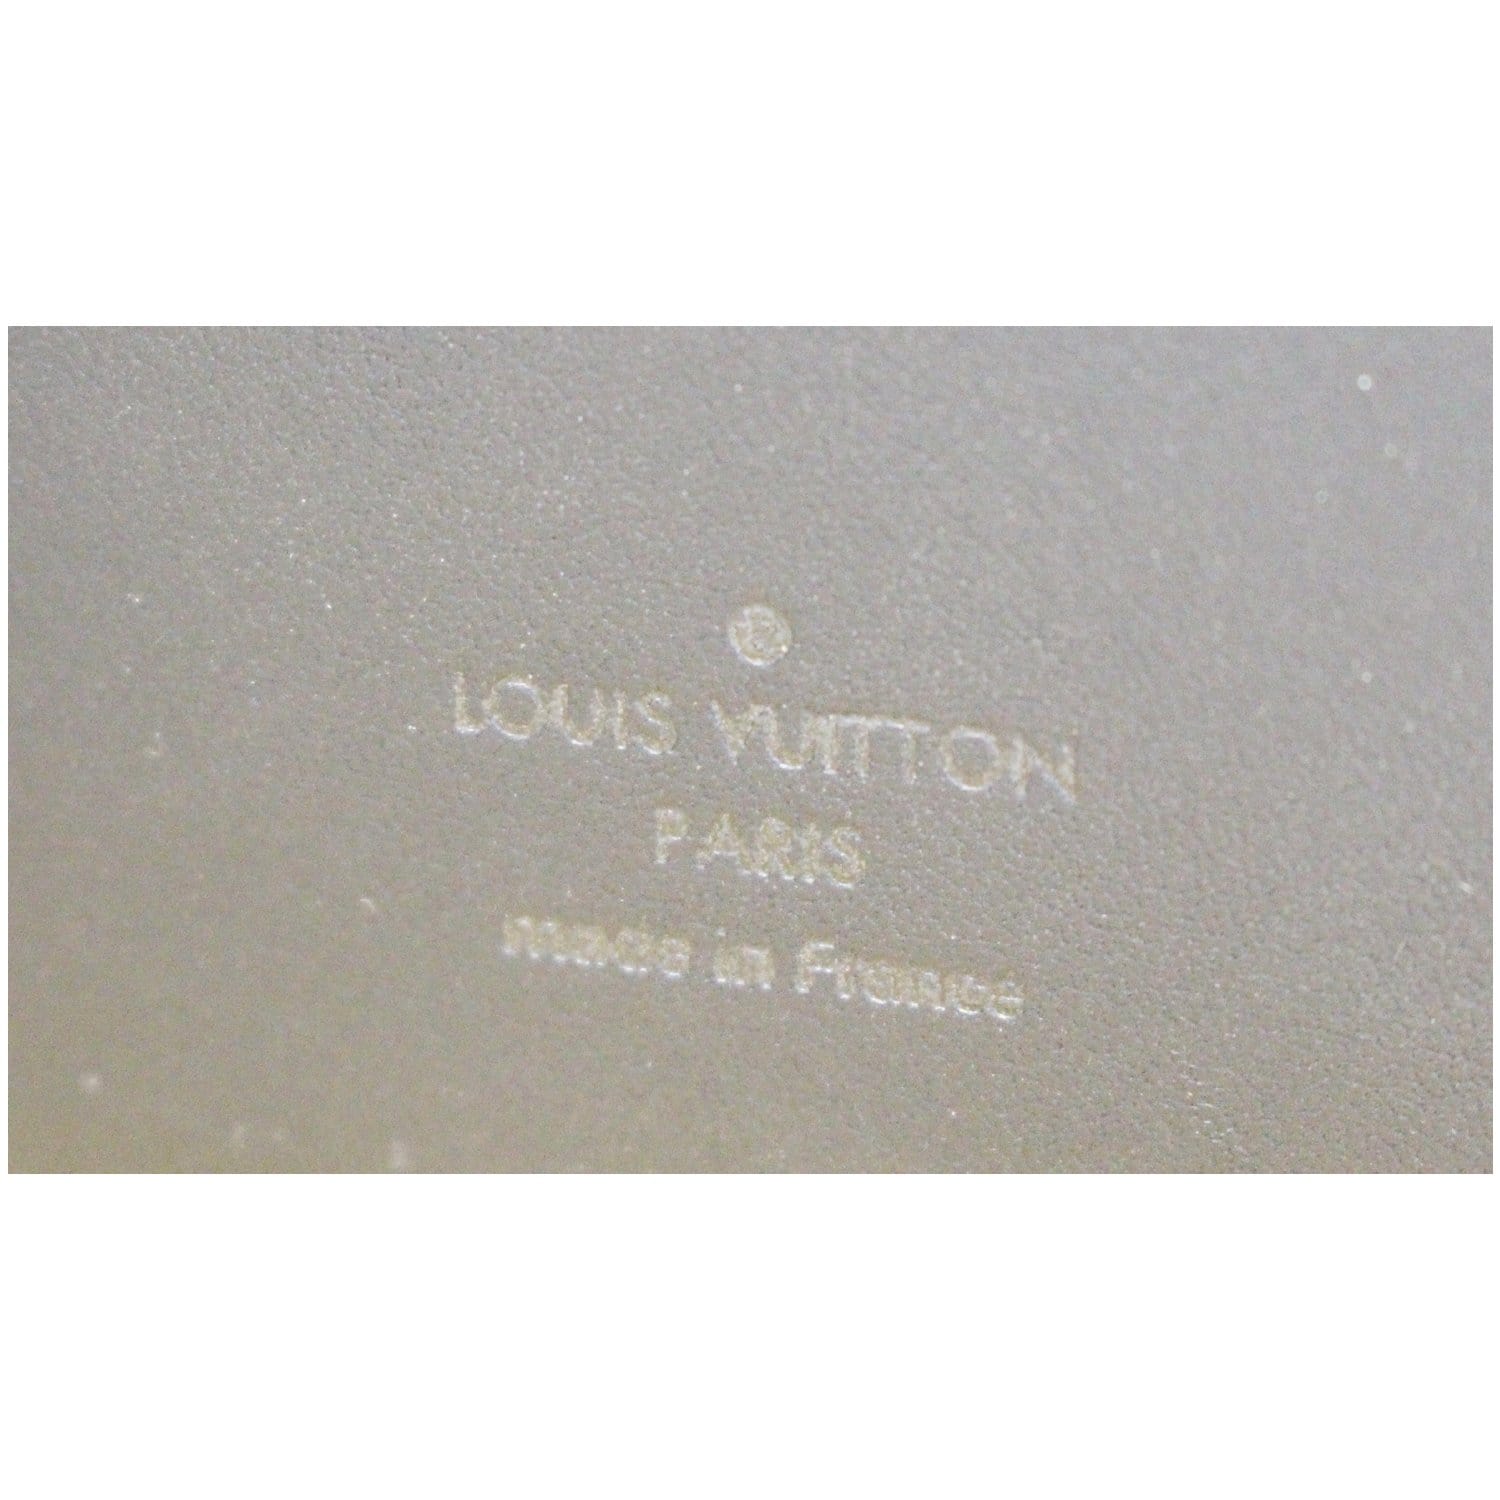 Louis Vuitton Pocket Organizer Damier Infini Onyx in Leather - US